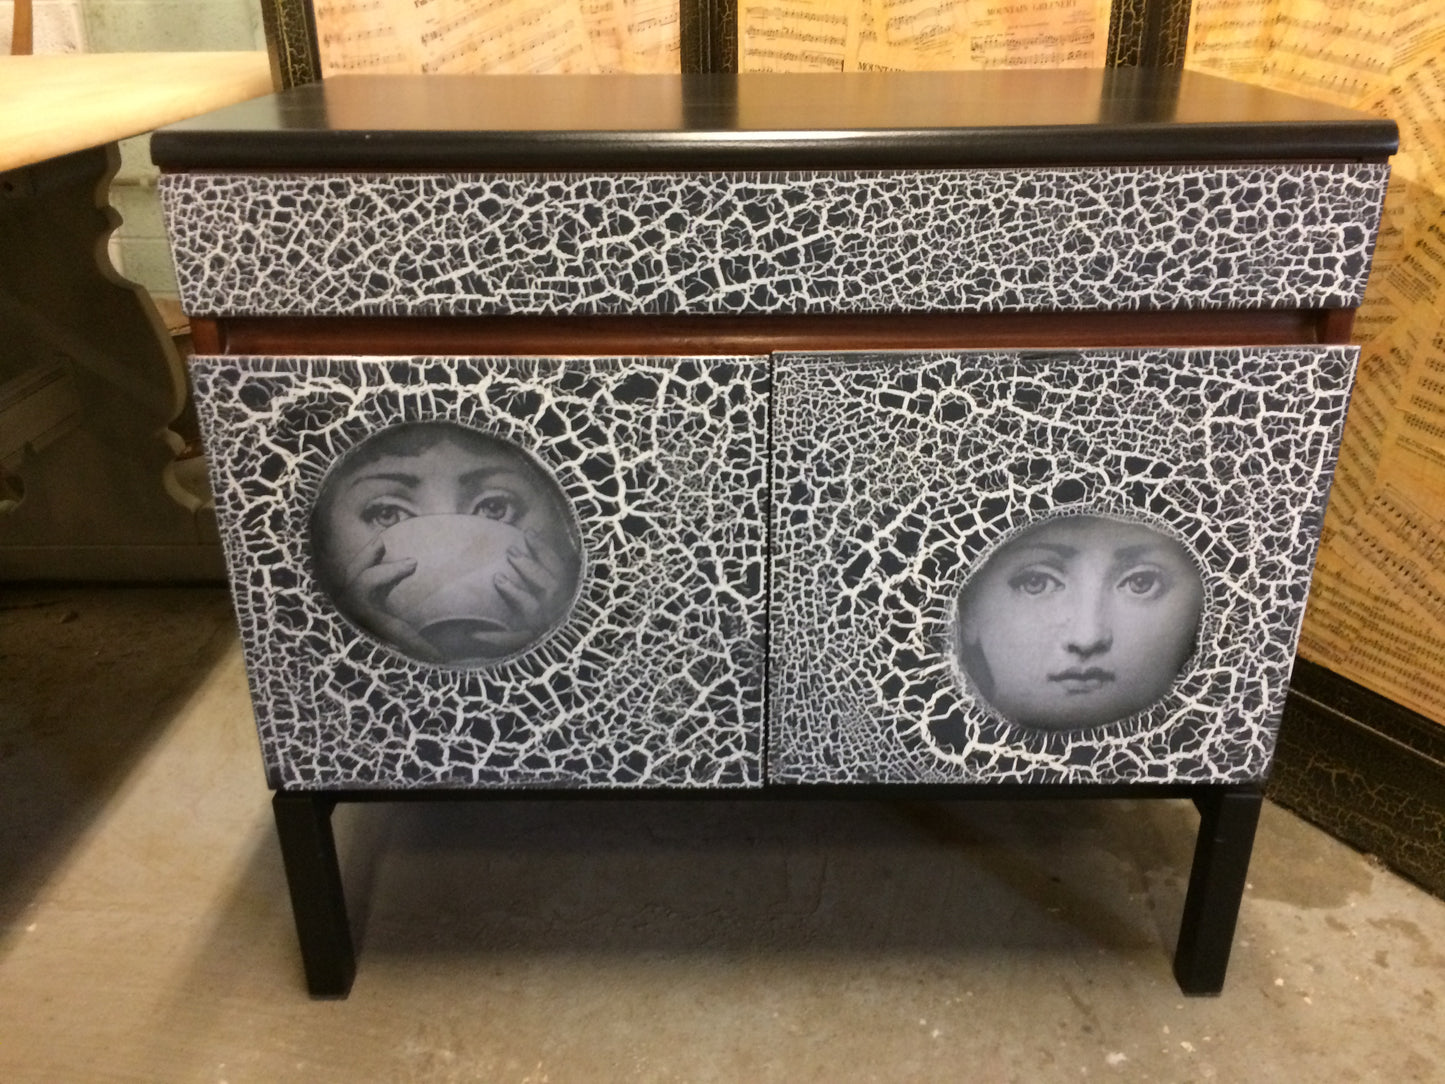 Fun Upcycled Retro Bijou Cabinet / Sideboard "Fornasetti" Style Decoupage